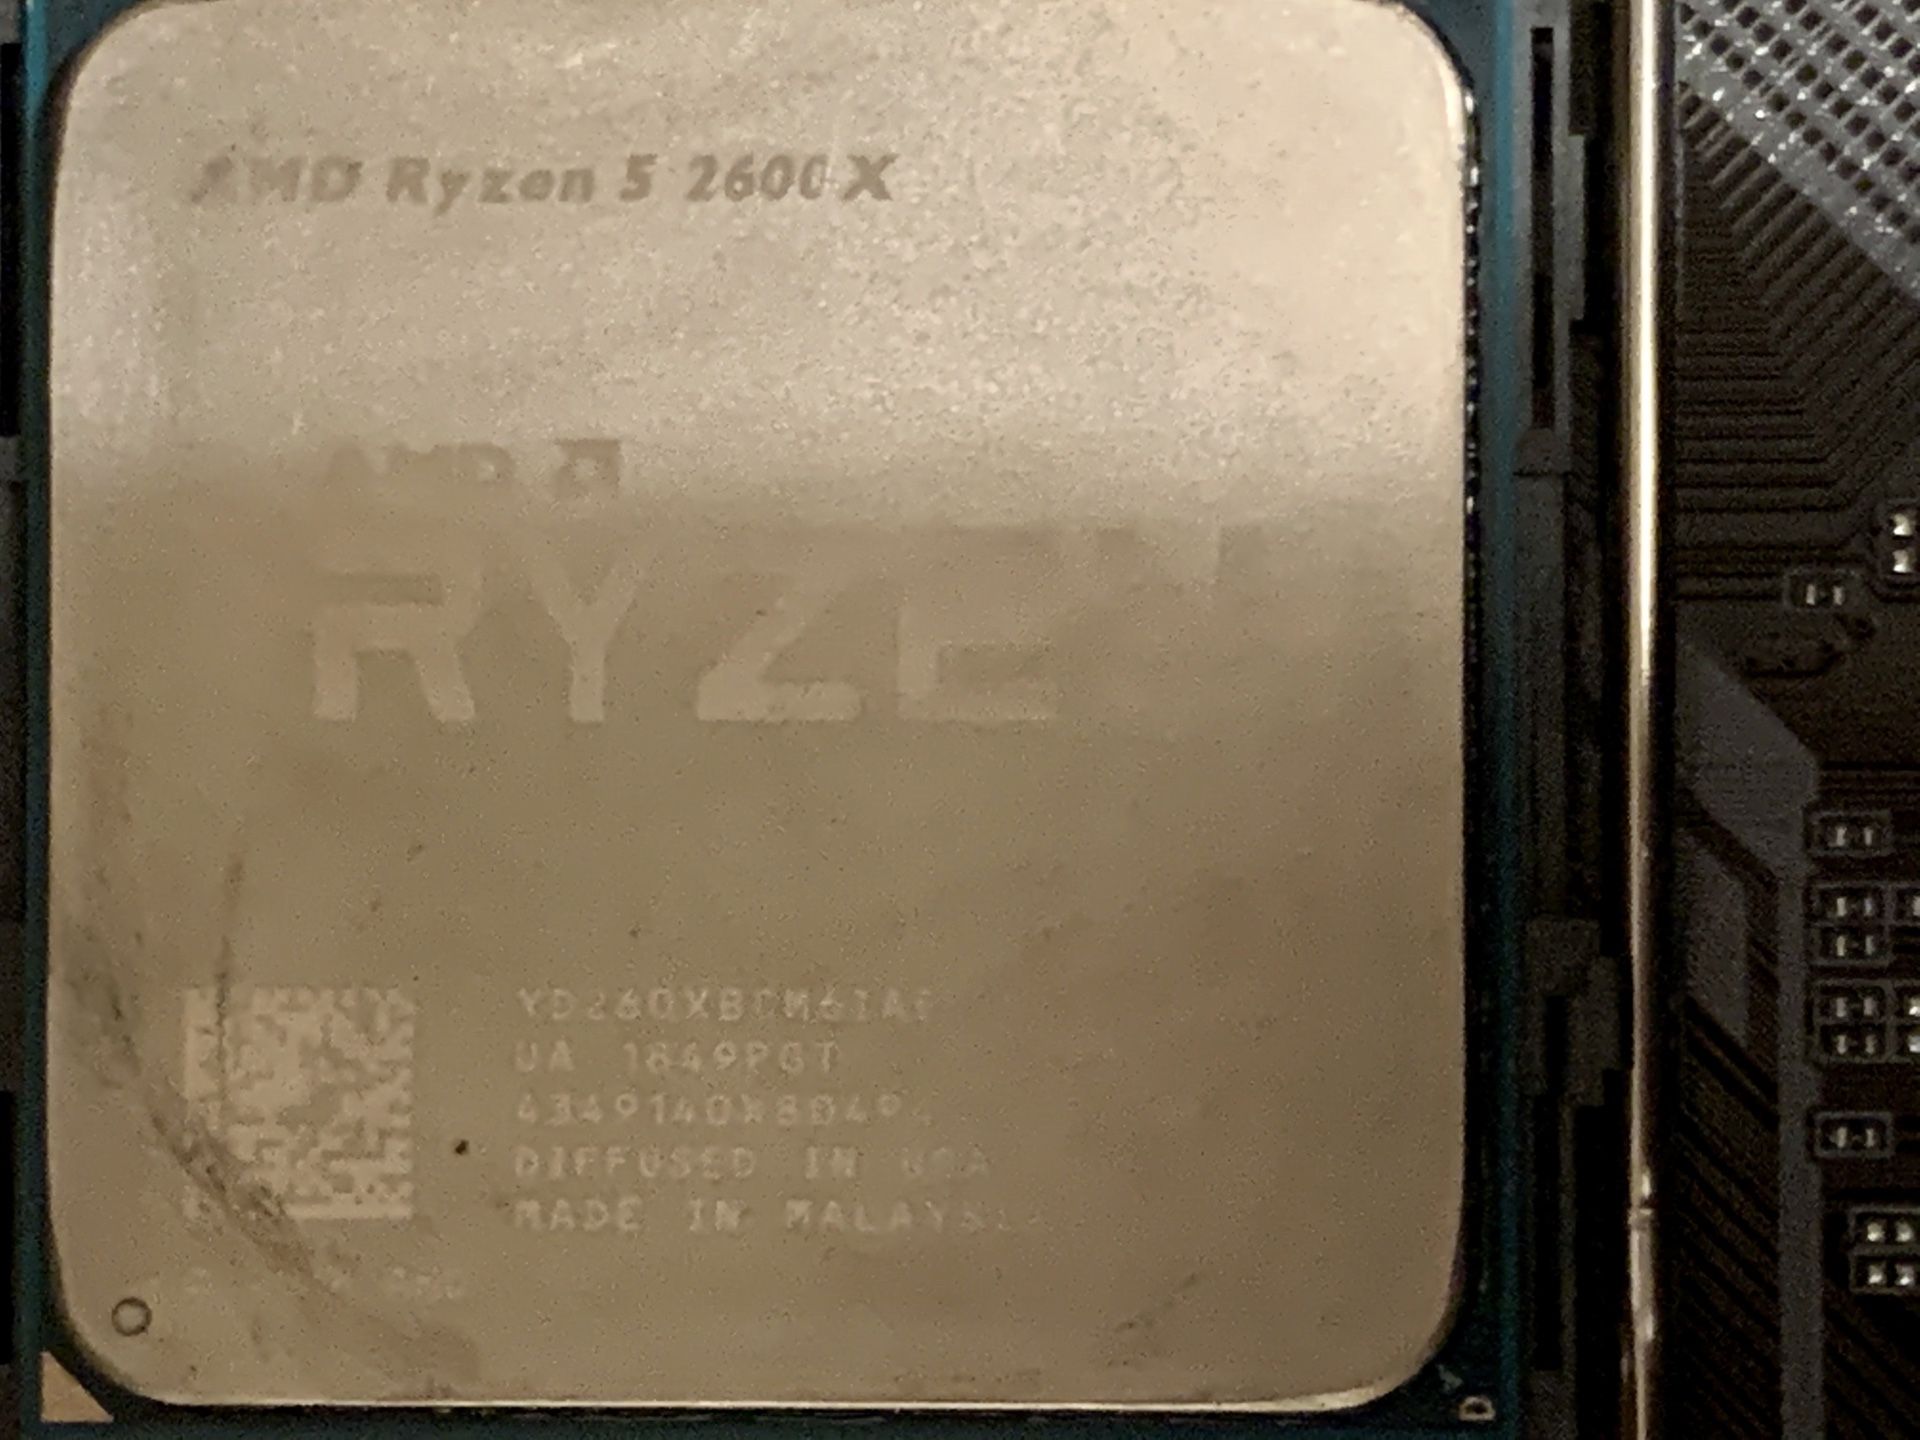 Ryzen 5 2600X Combo